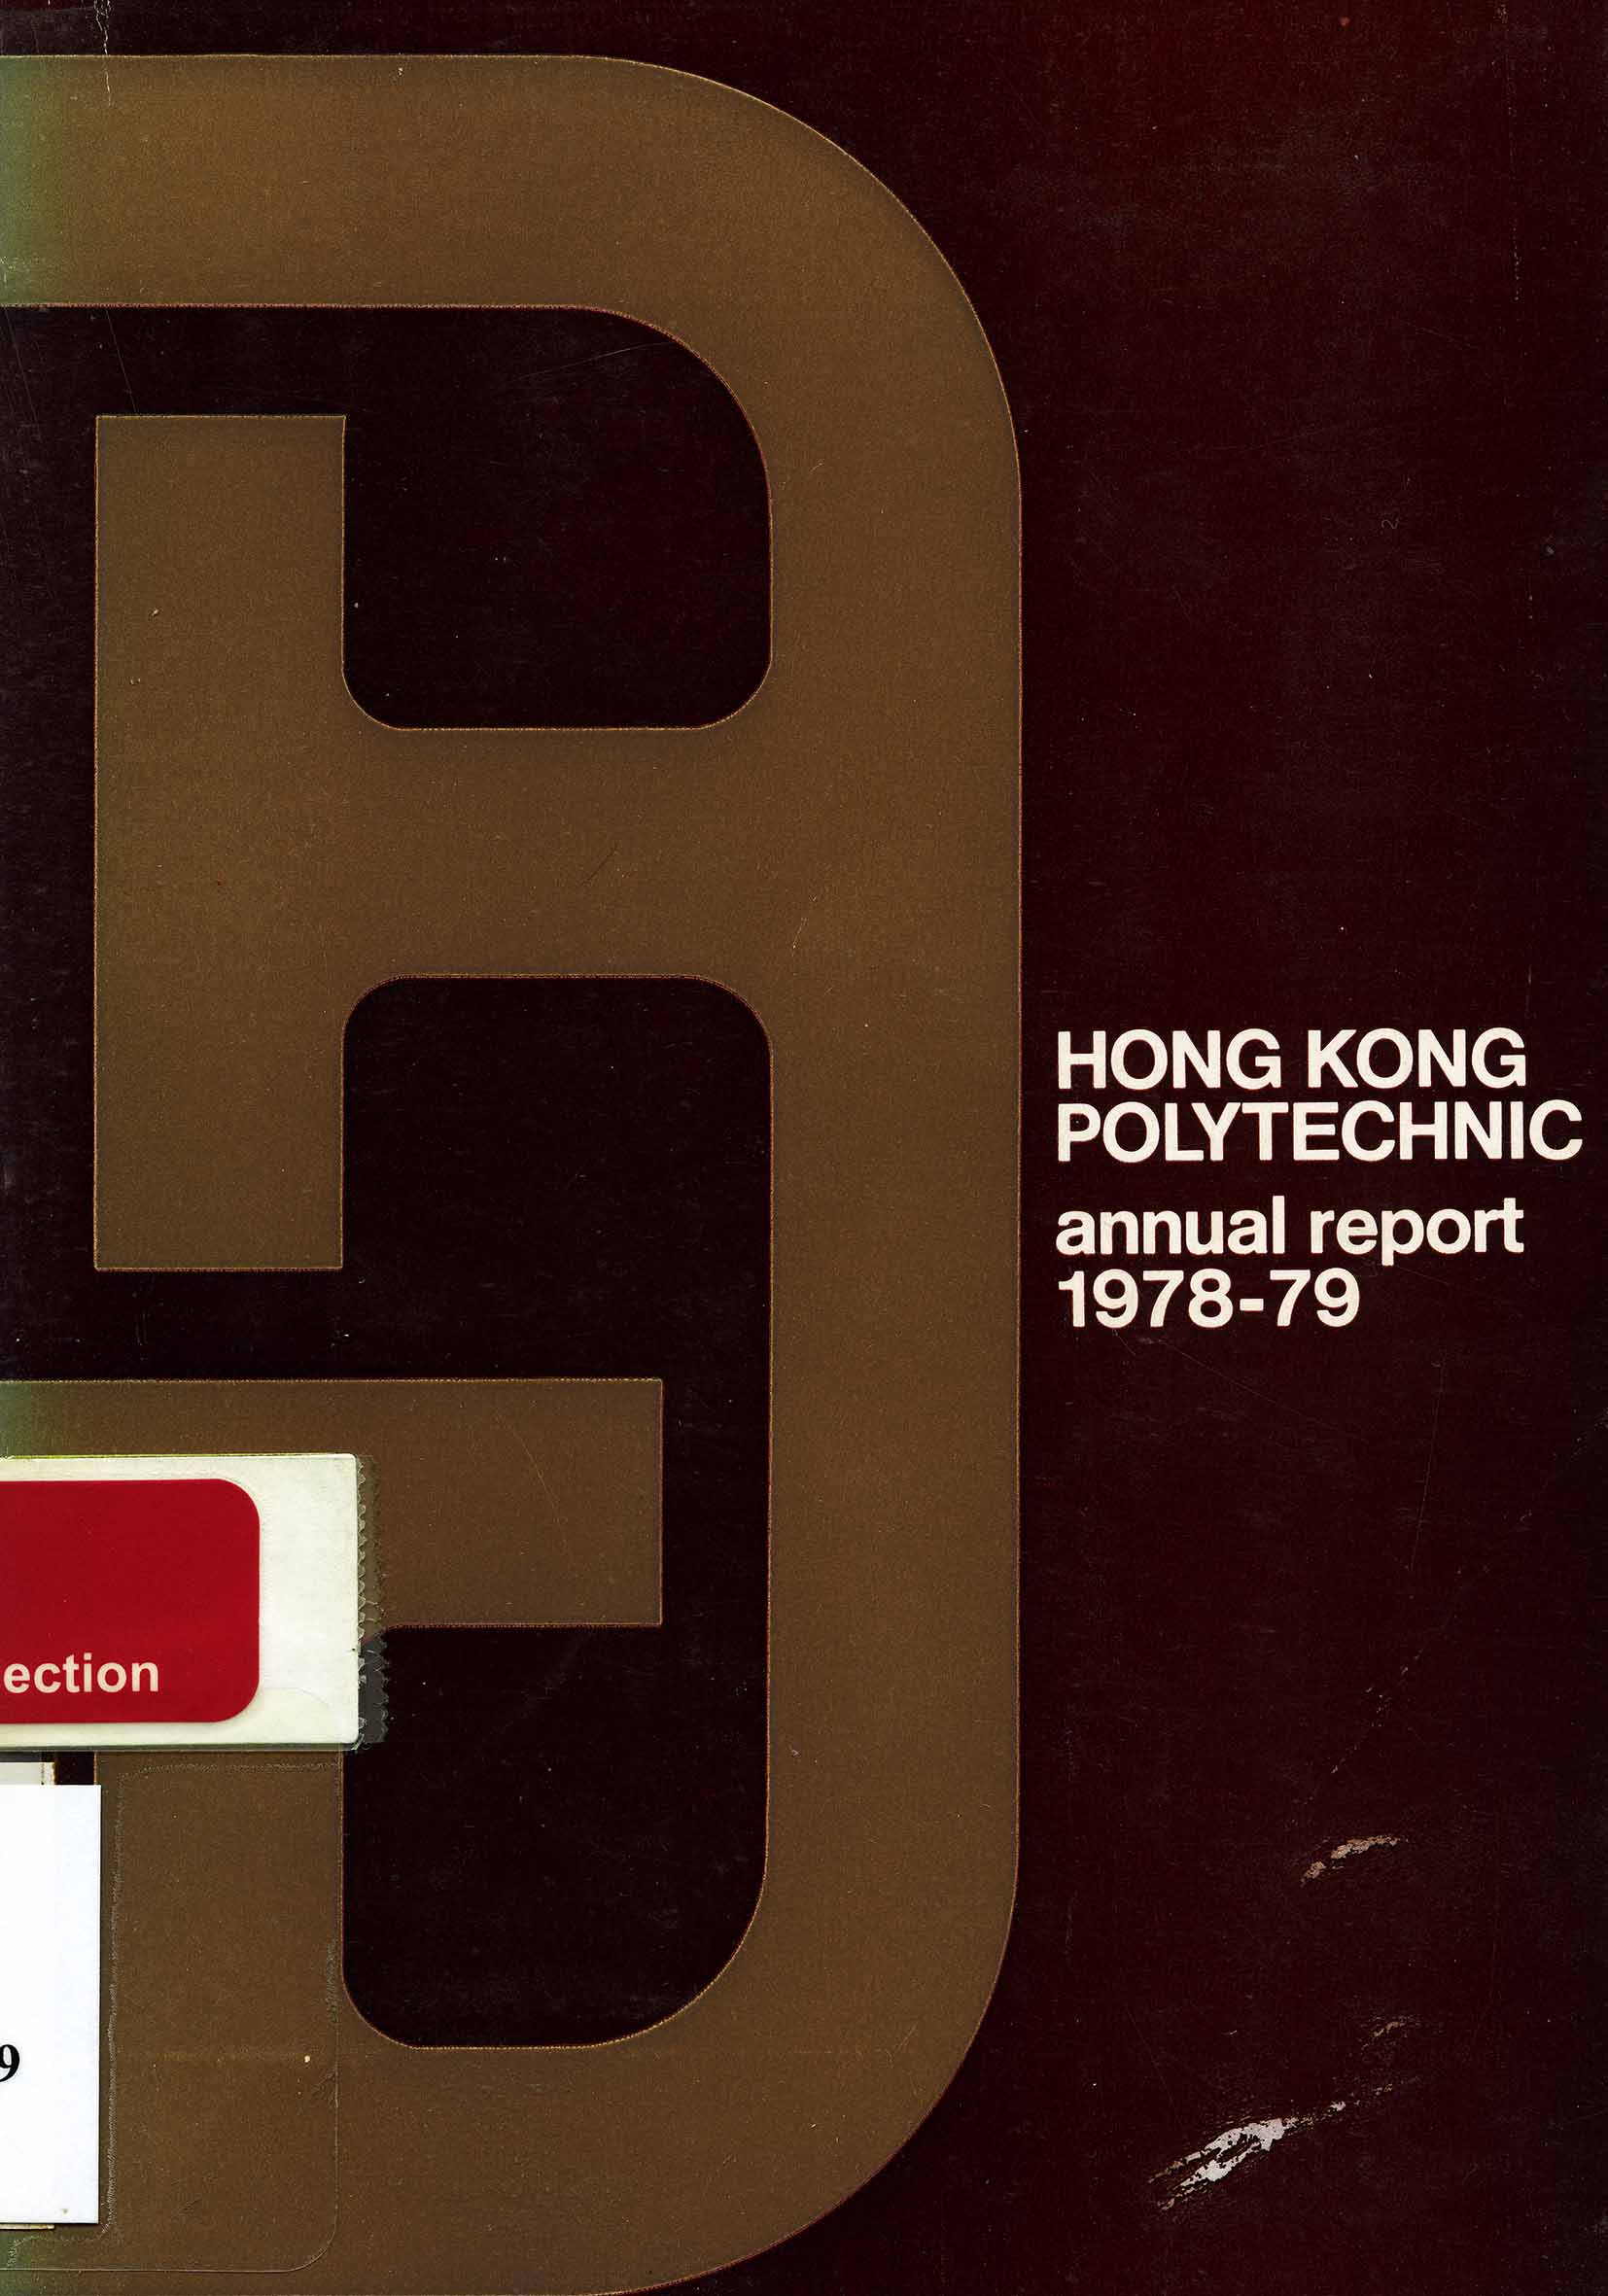 Hong Kong Polytechnic Annual Report 1978/79